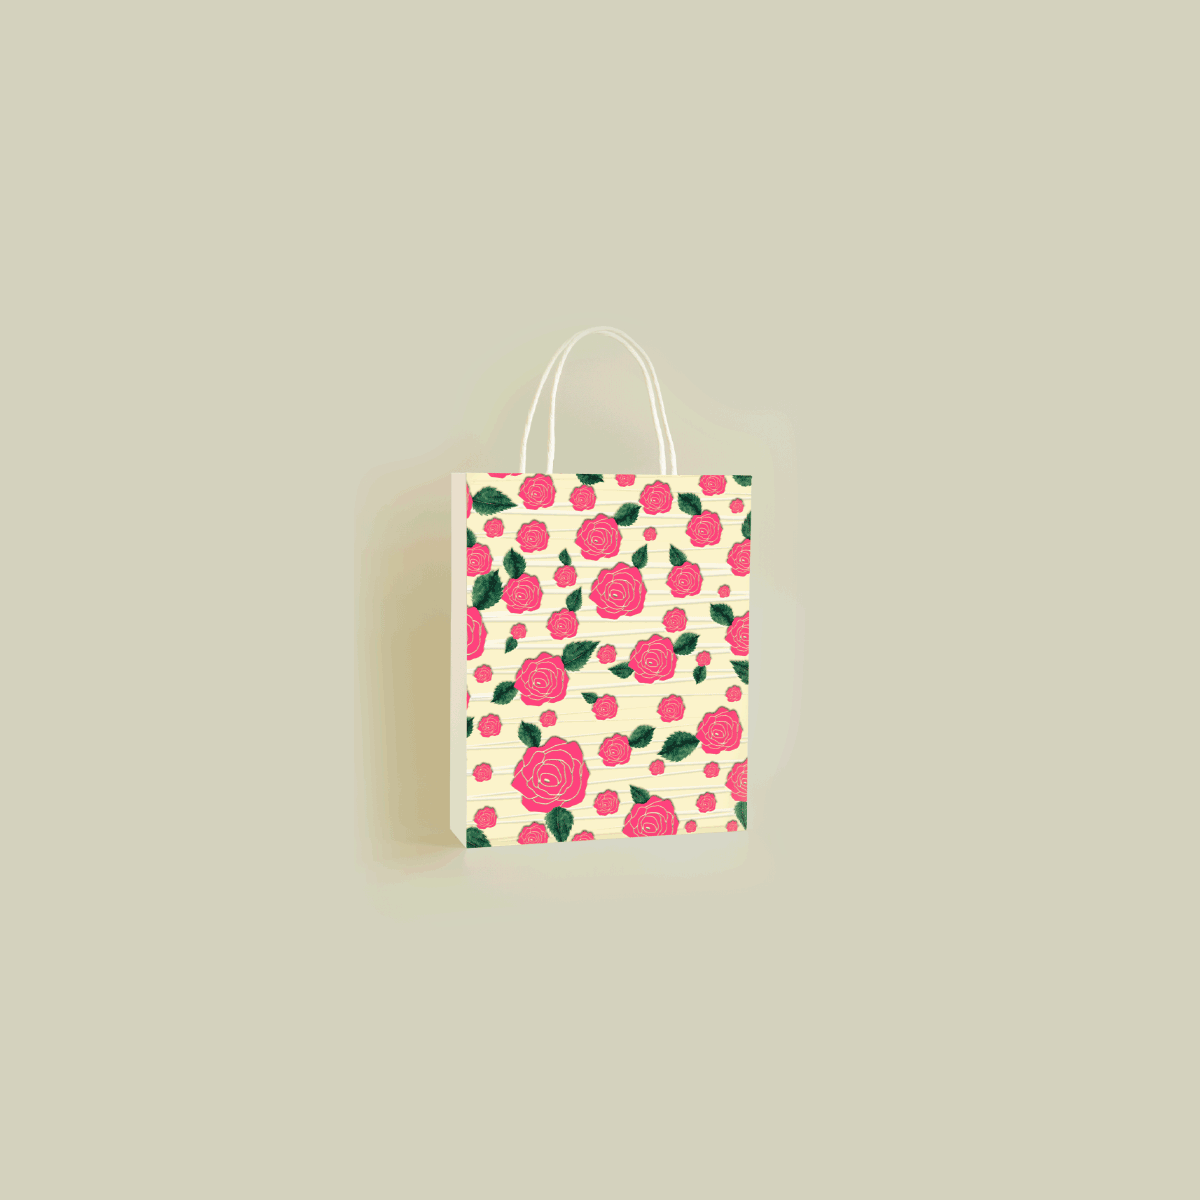 paper bag rose pink.png sml 931